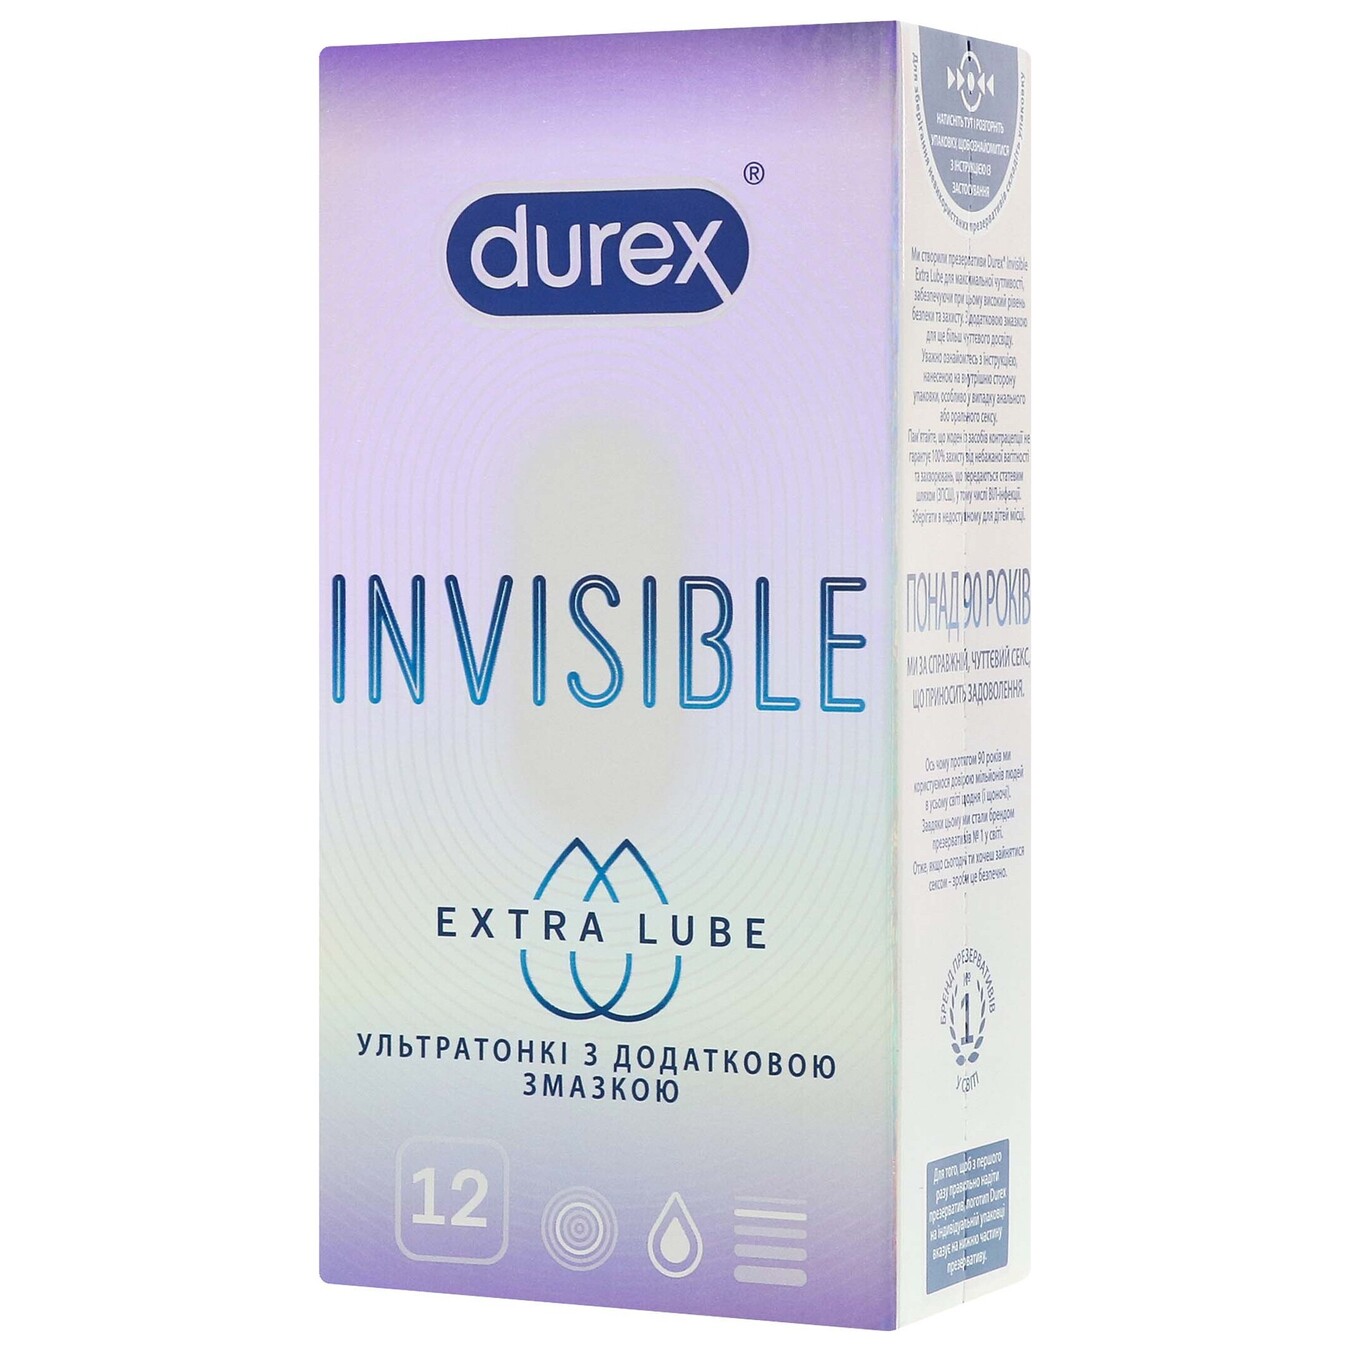 Презервативы Durex №12 Invisible Extra Lube латексные со смазкой 2